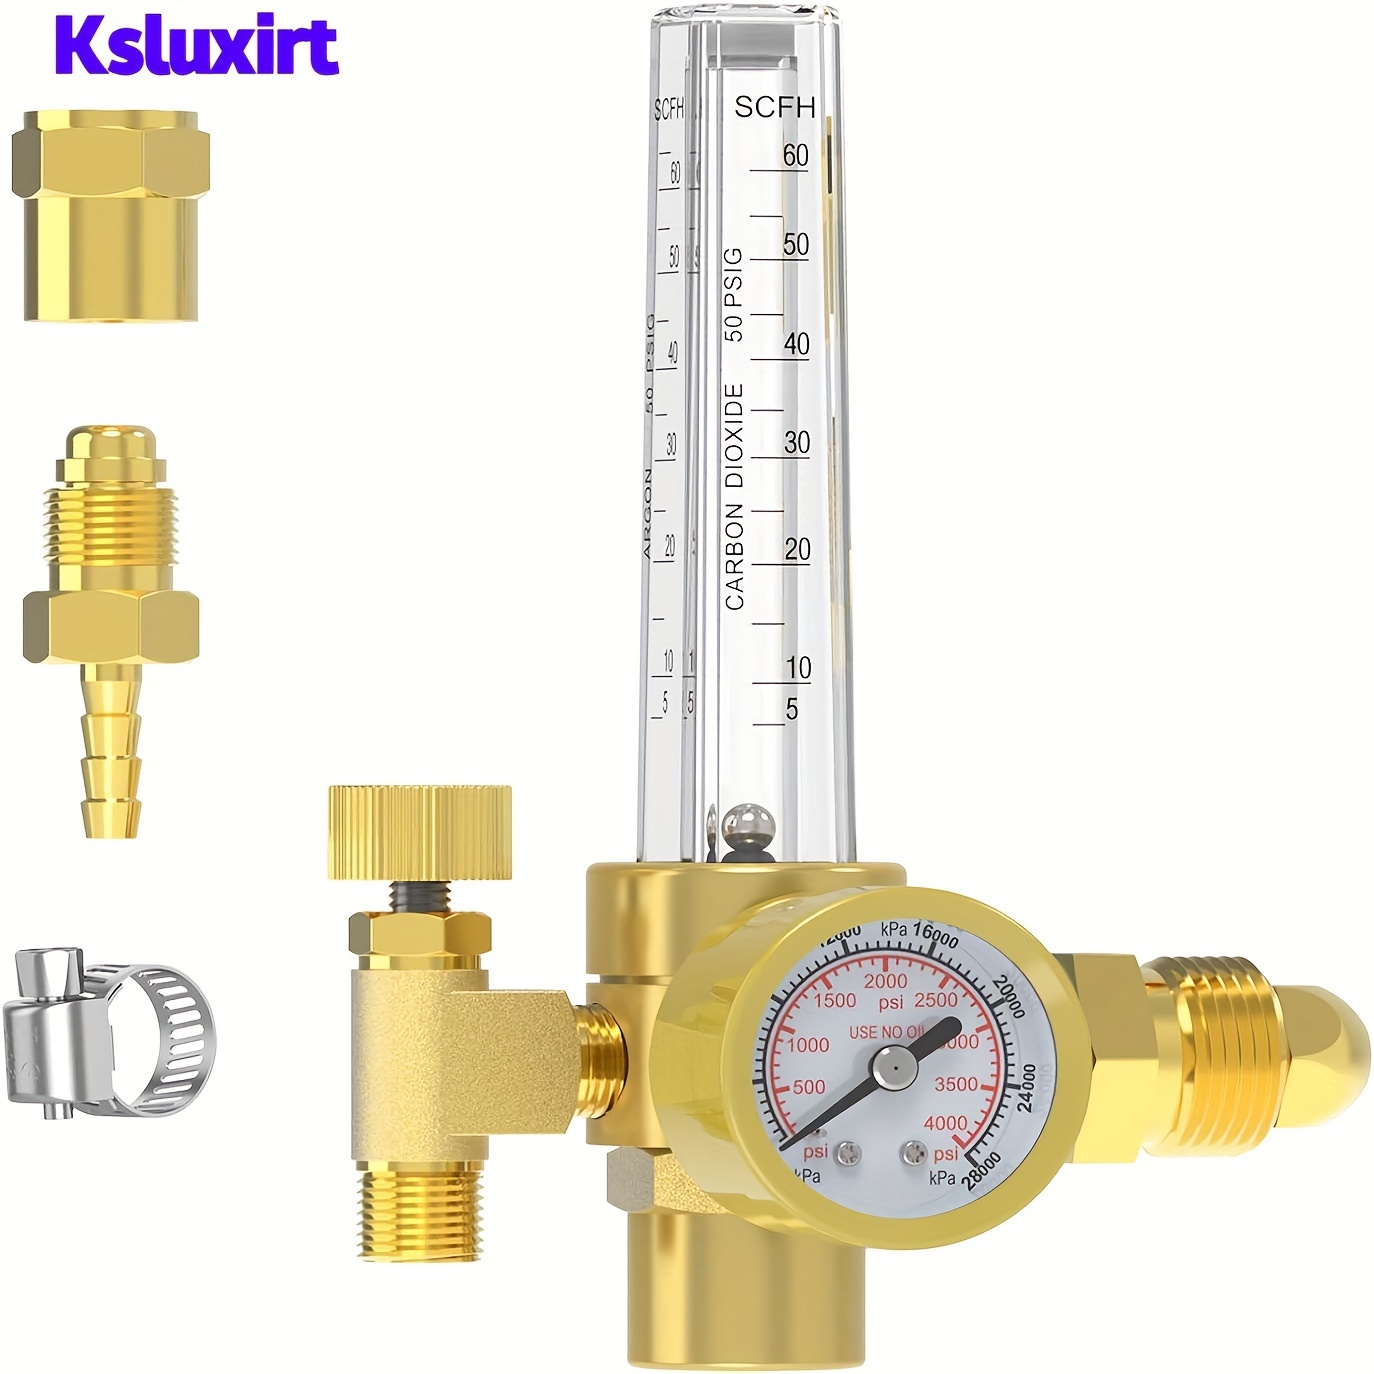 

Ksluxirt Precision & Co2 Flow Meter - 0-4000 Psi, Adjustable 10-60 Cfh Gas Welding Regulator For Mig & Tig, Copper Construction